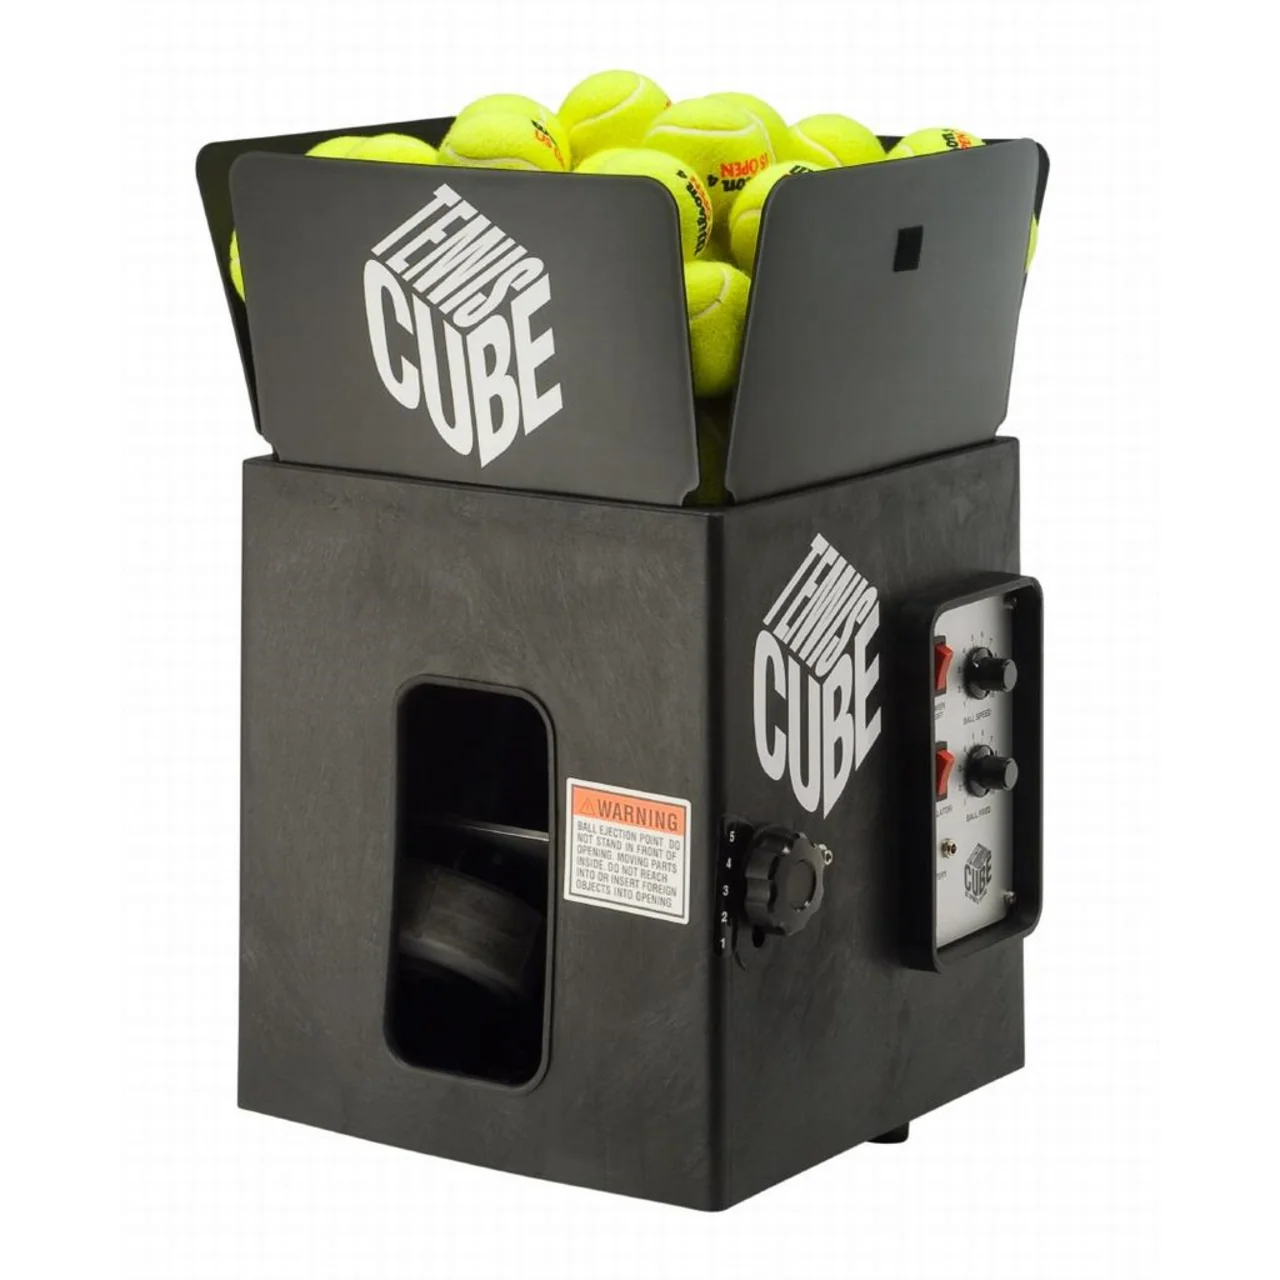 Tennis Cube Portable